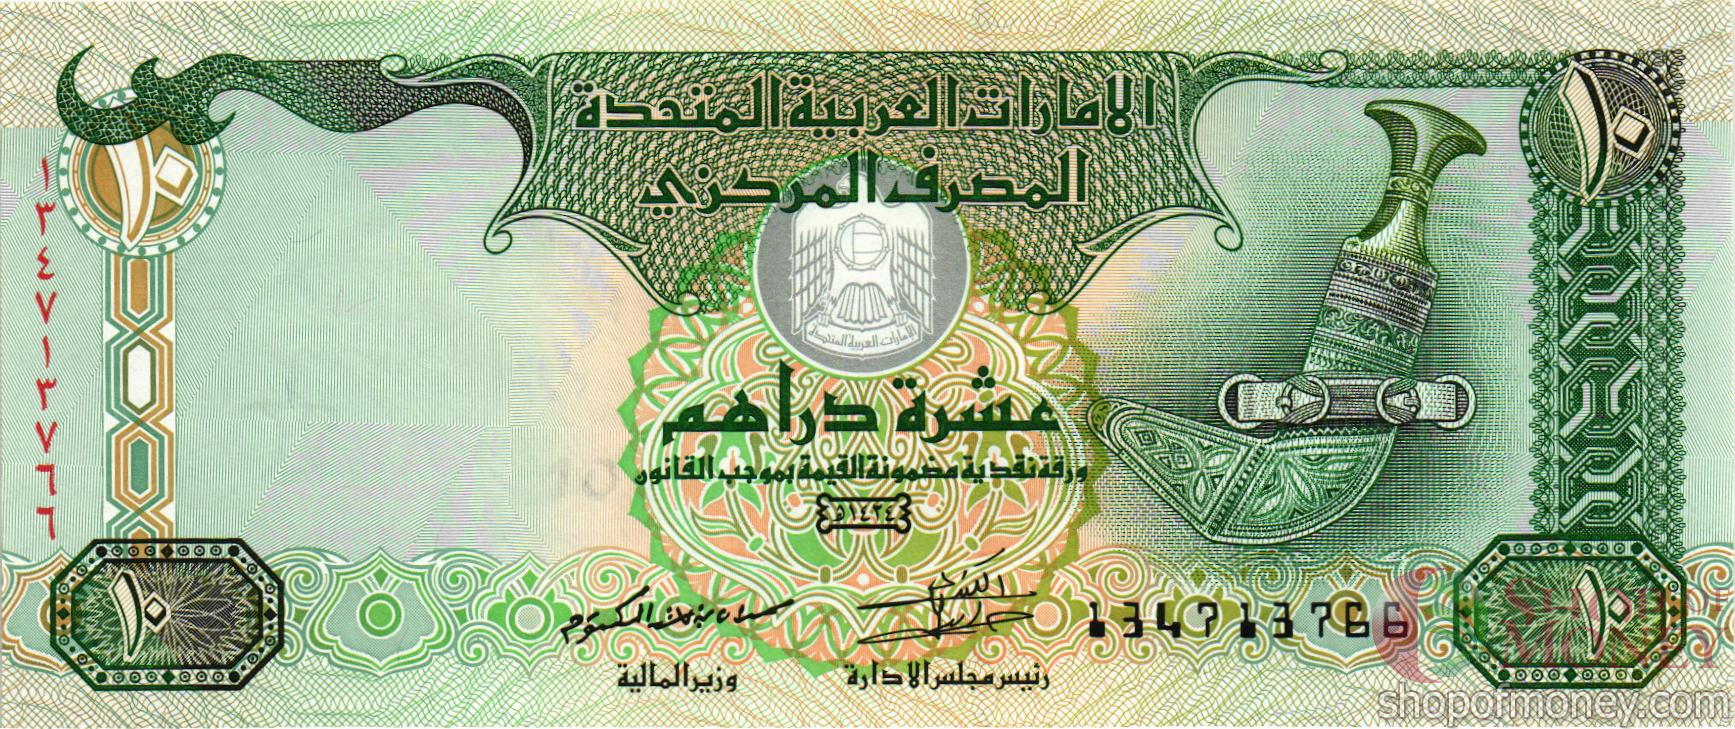 140 дирхам. 10 Дирхам ОАЭ. Бумажные банкноты ОАЭ. Объединённые арабские эмираты 10 дирхам. Купюры дирхамы ОАЭ.